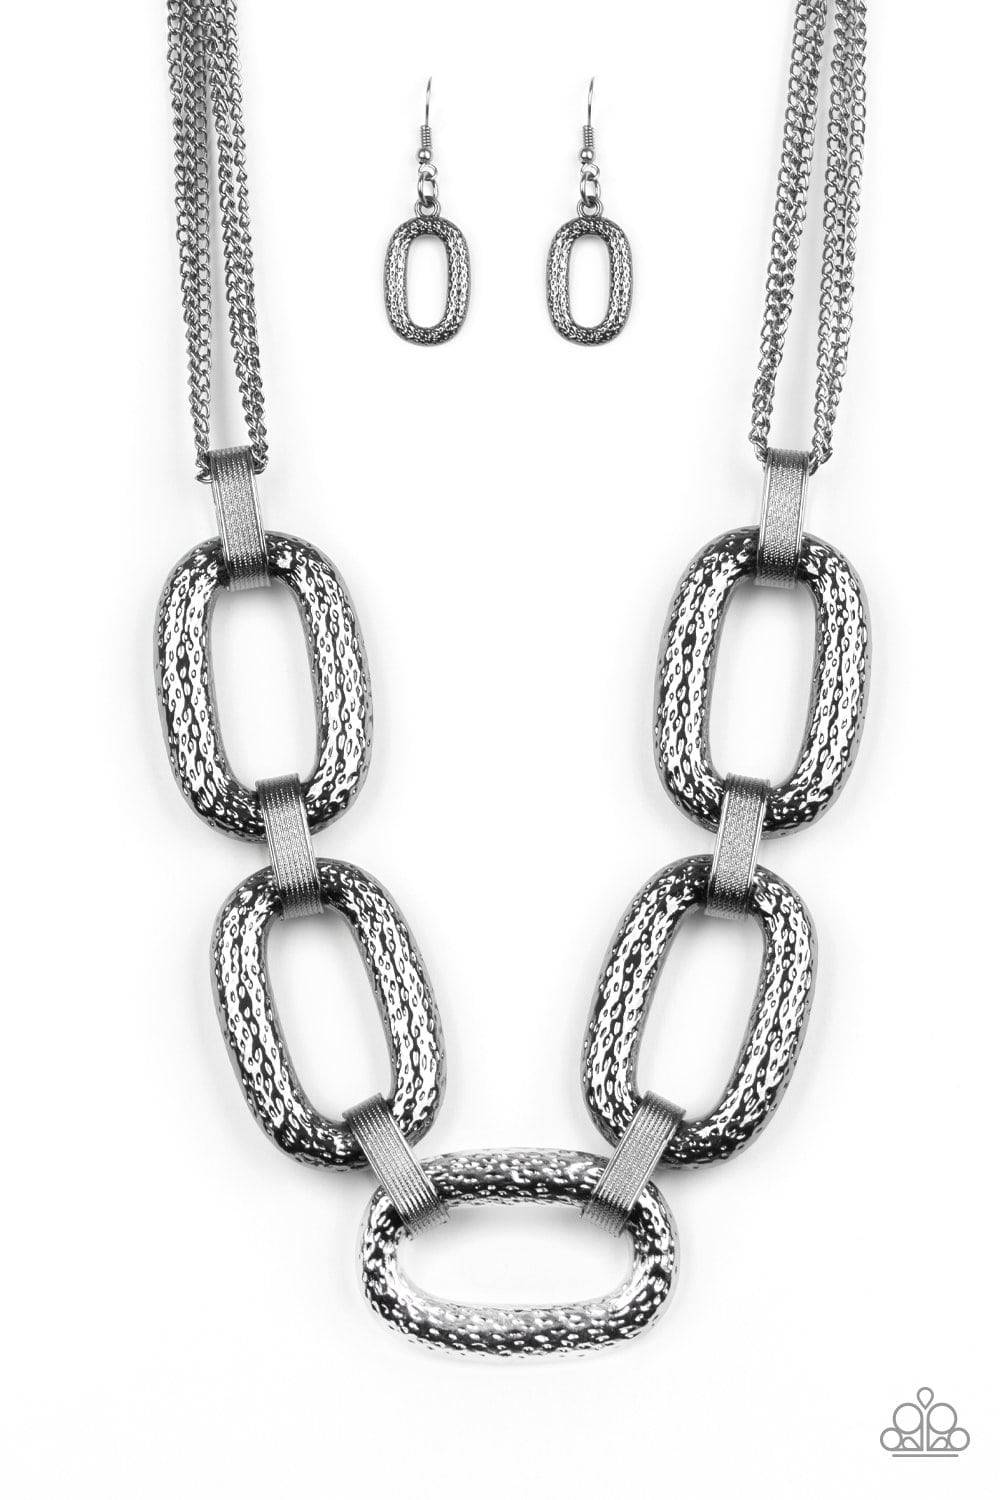 Take Charge - Black Gunmetal Necklace - Paparazzi Accessories - GlaMarous Titi Jewels